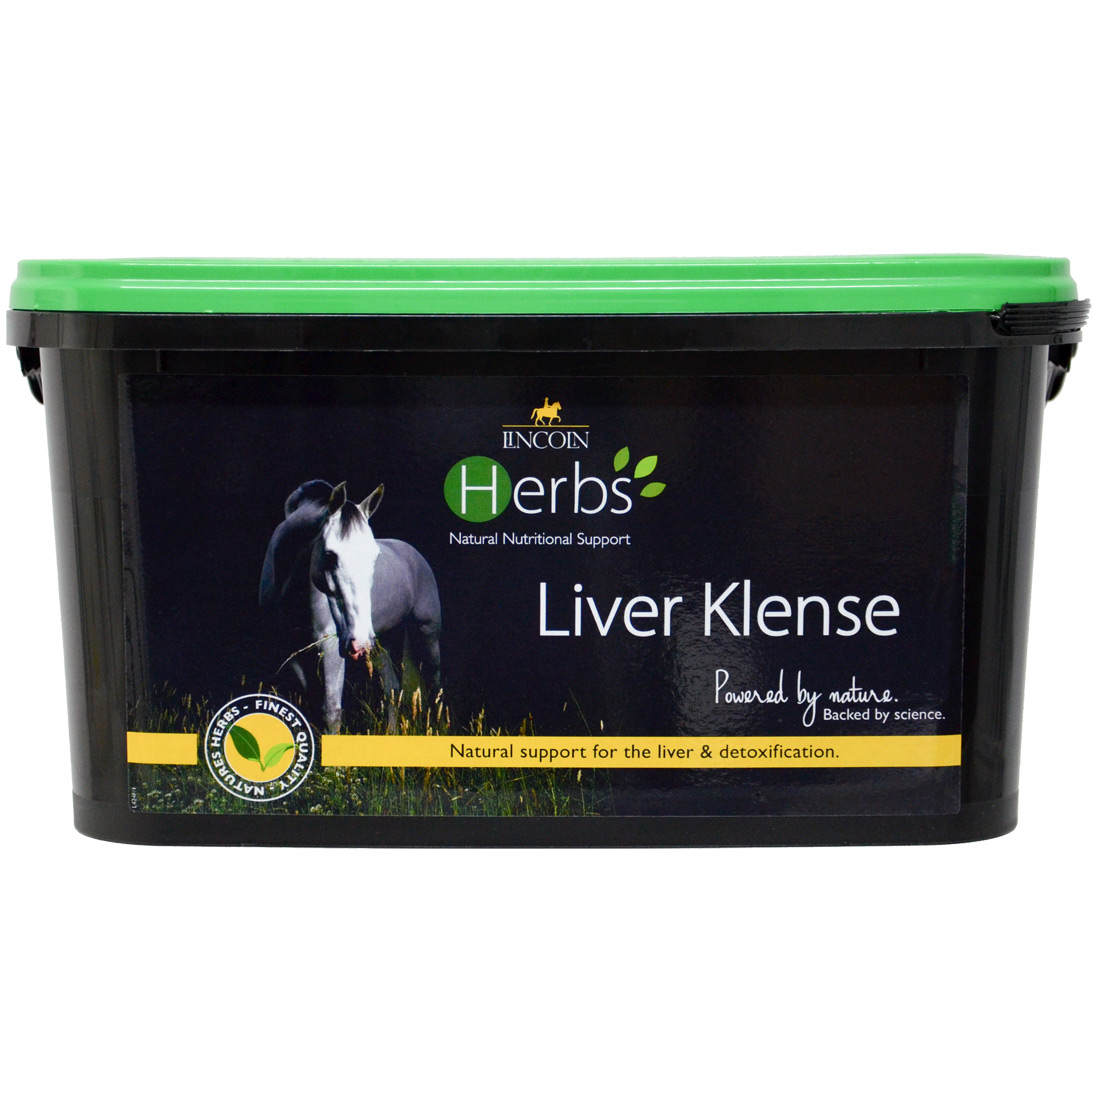 Lincoln Herbs Liver Klense – 1kg